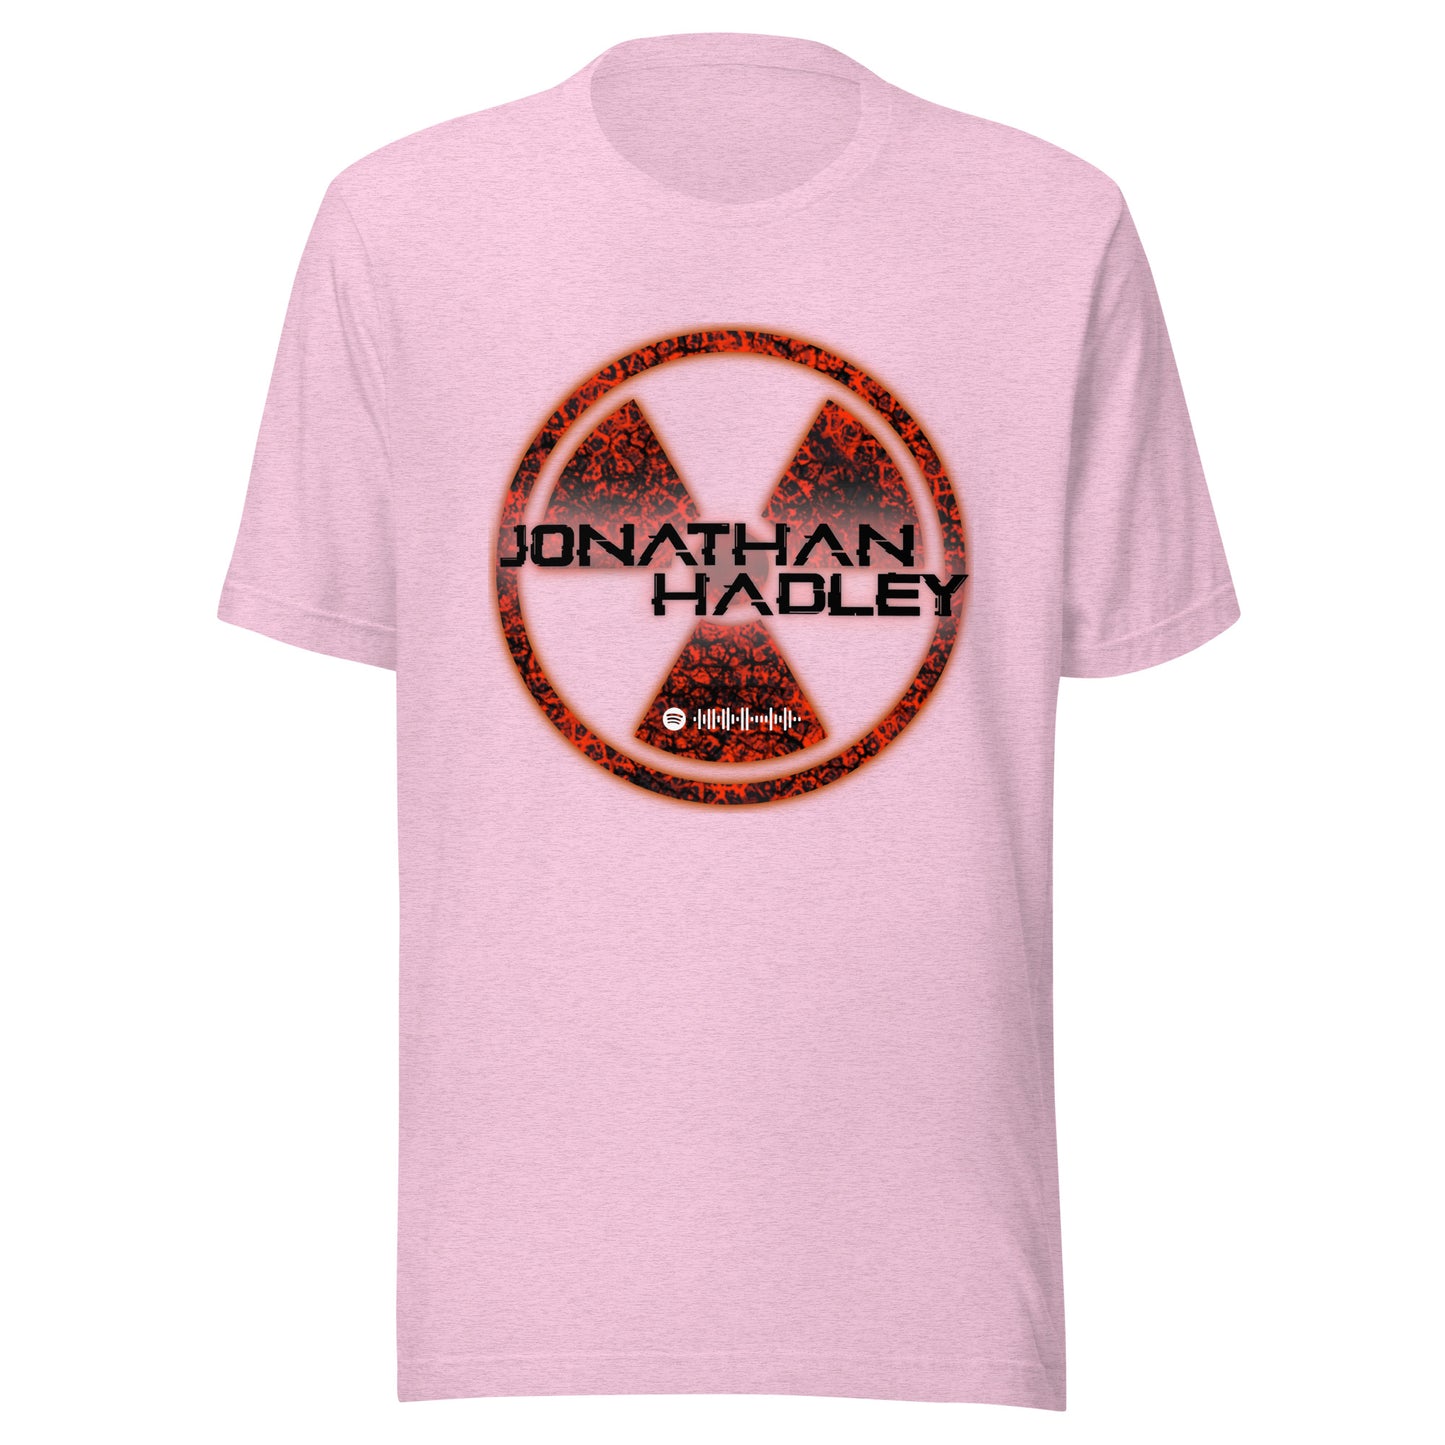 Jonathan Hadley Radiation T-Shirt